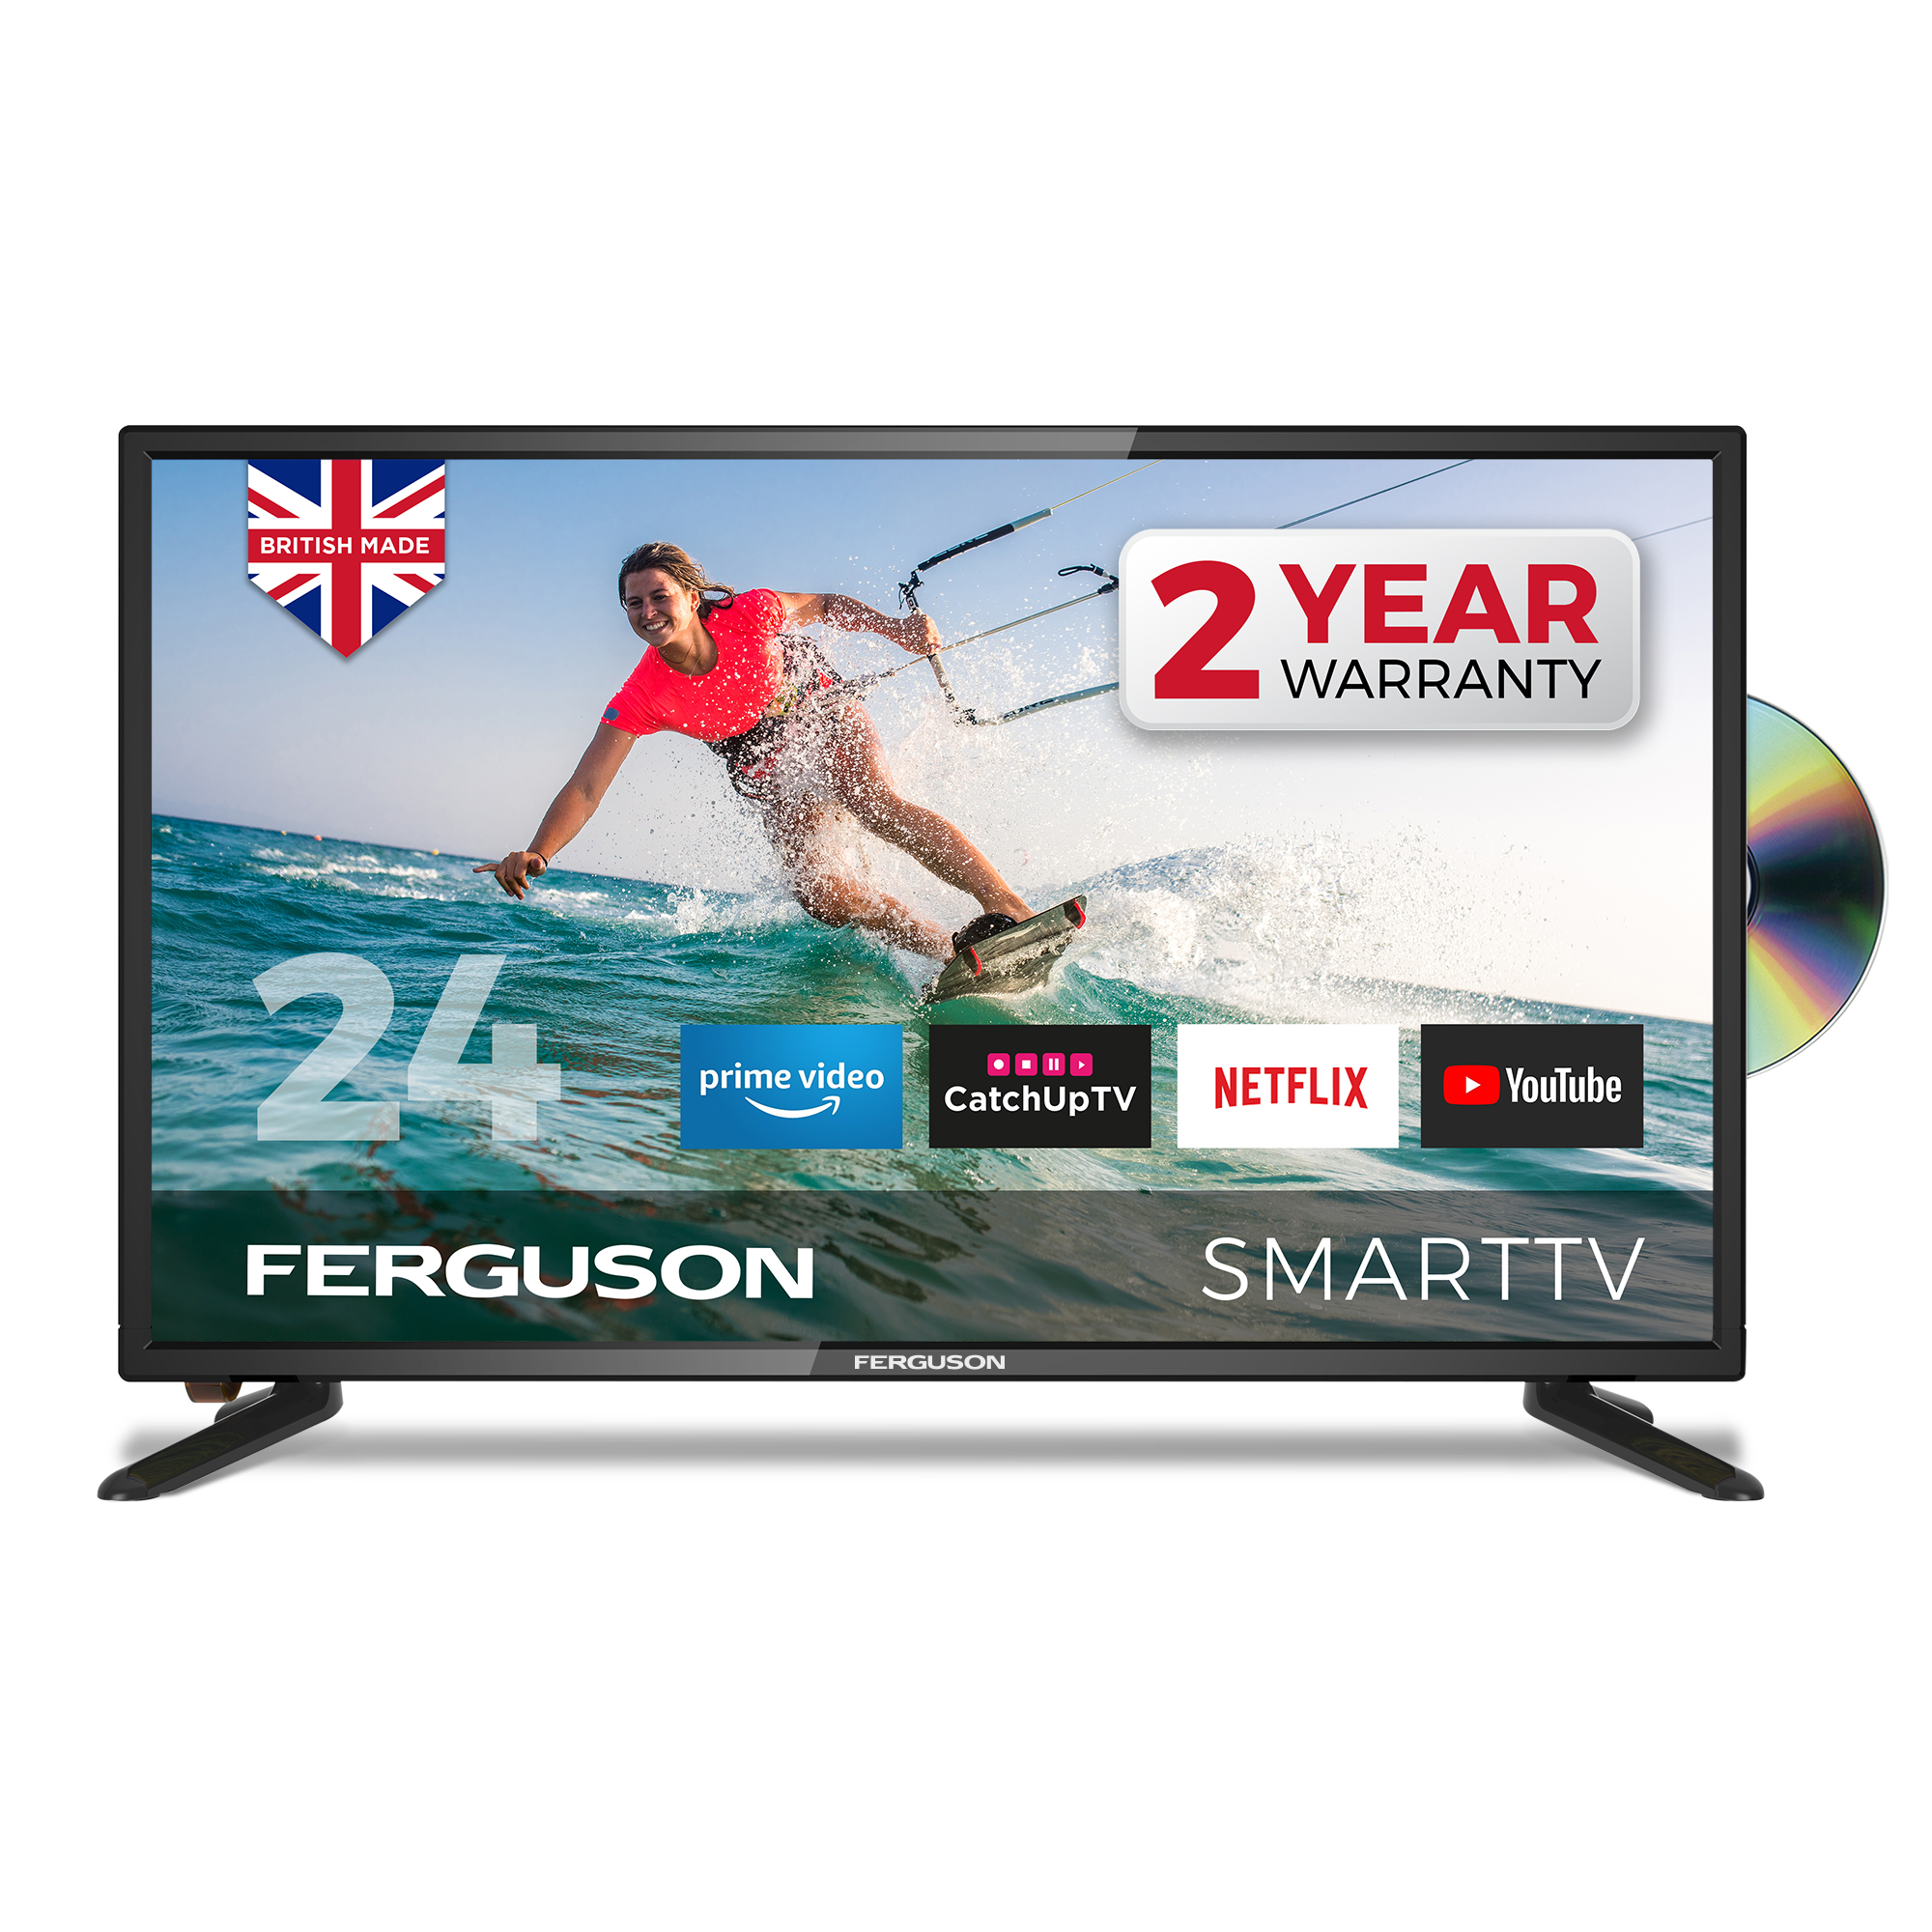 Ferguson F2420RTSF 24 inch Smart HD Ready LED TV with DVD Player Digital  Tec LTD Cello  Ferguson British Made Televisions